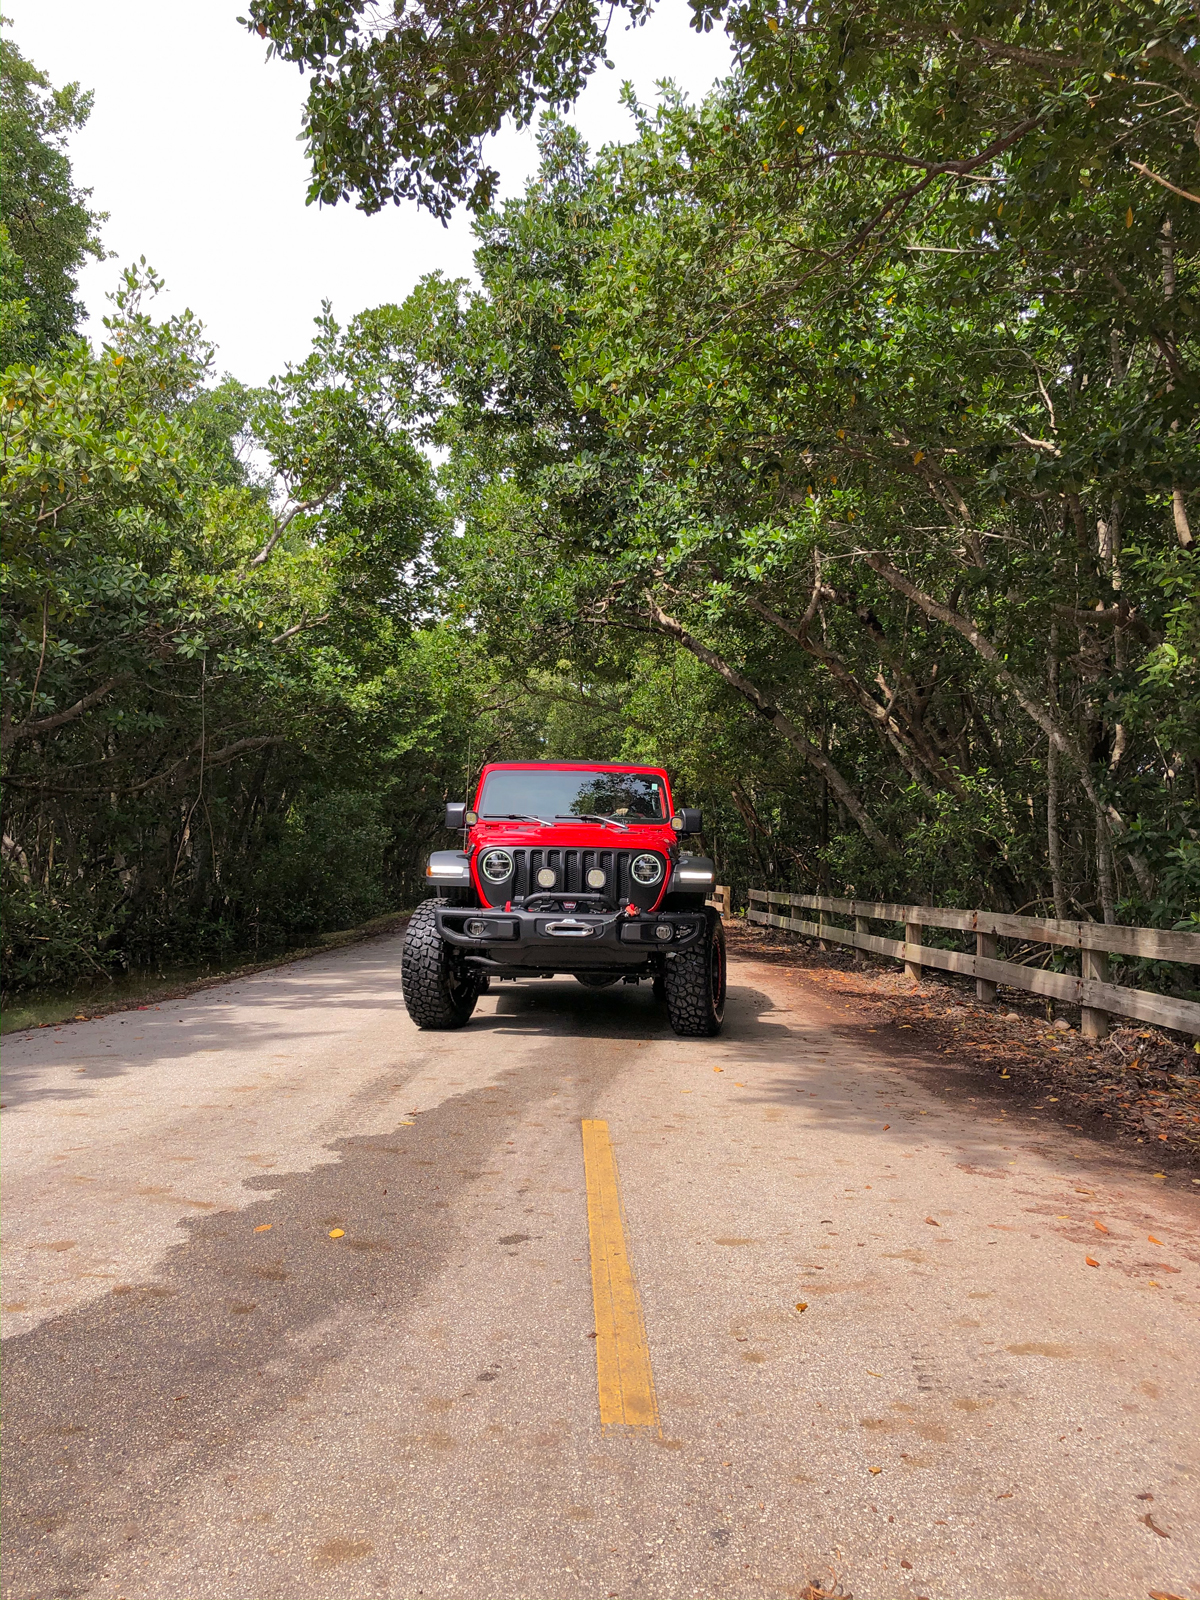 Jeep Wrangler Rubicon Exploring High Tide in Matheson Hammock Park in Coral Gables, Florida - Miami